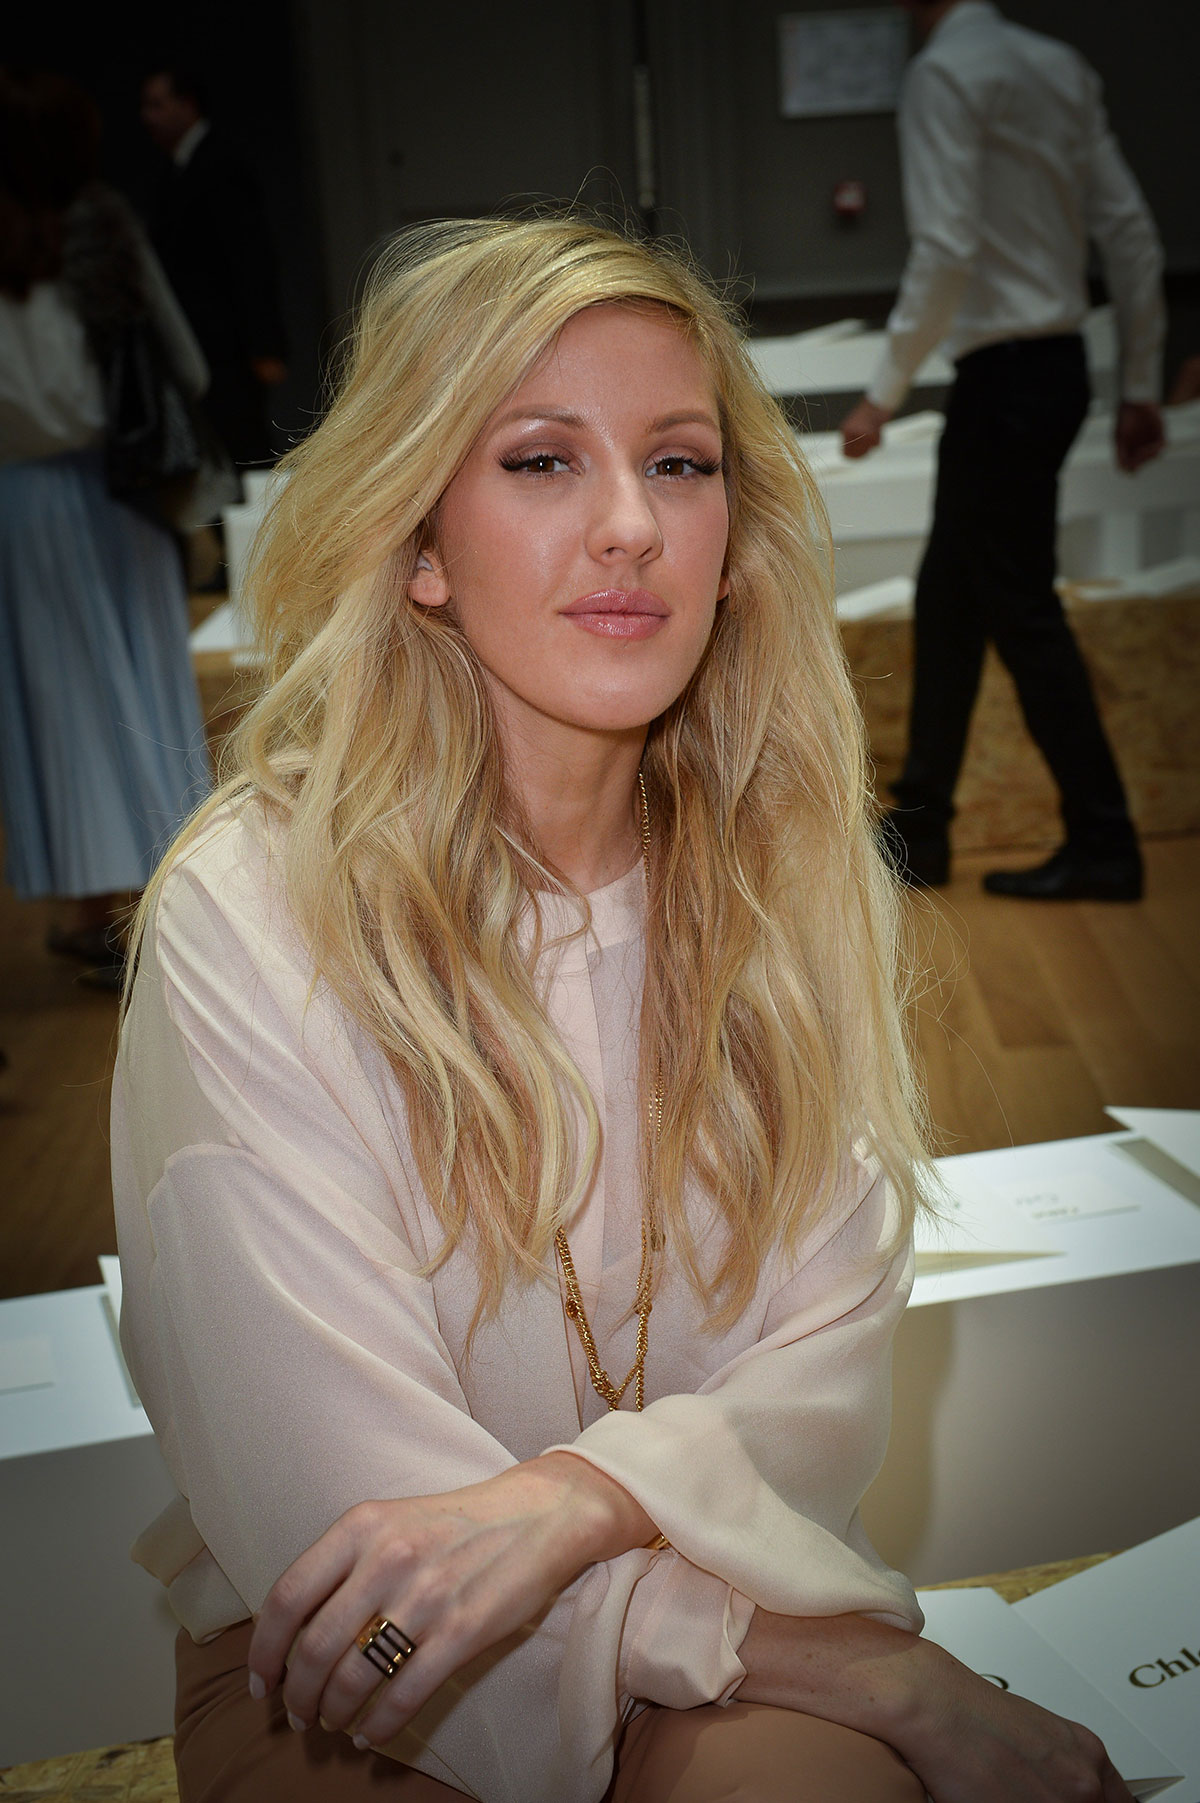 Ellie Goulding attends Chloe’s Spring-Summer 2015 show in Paris